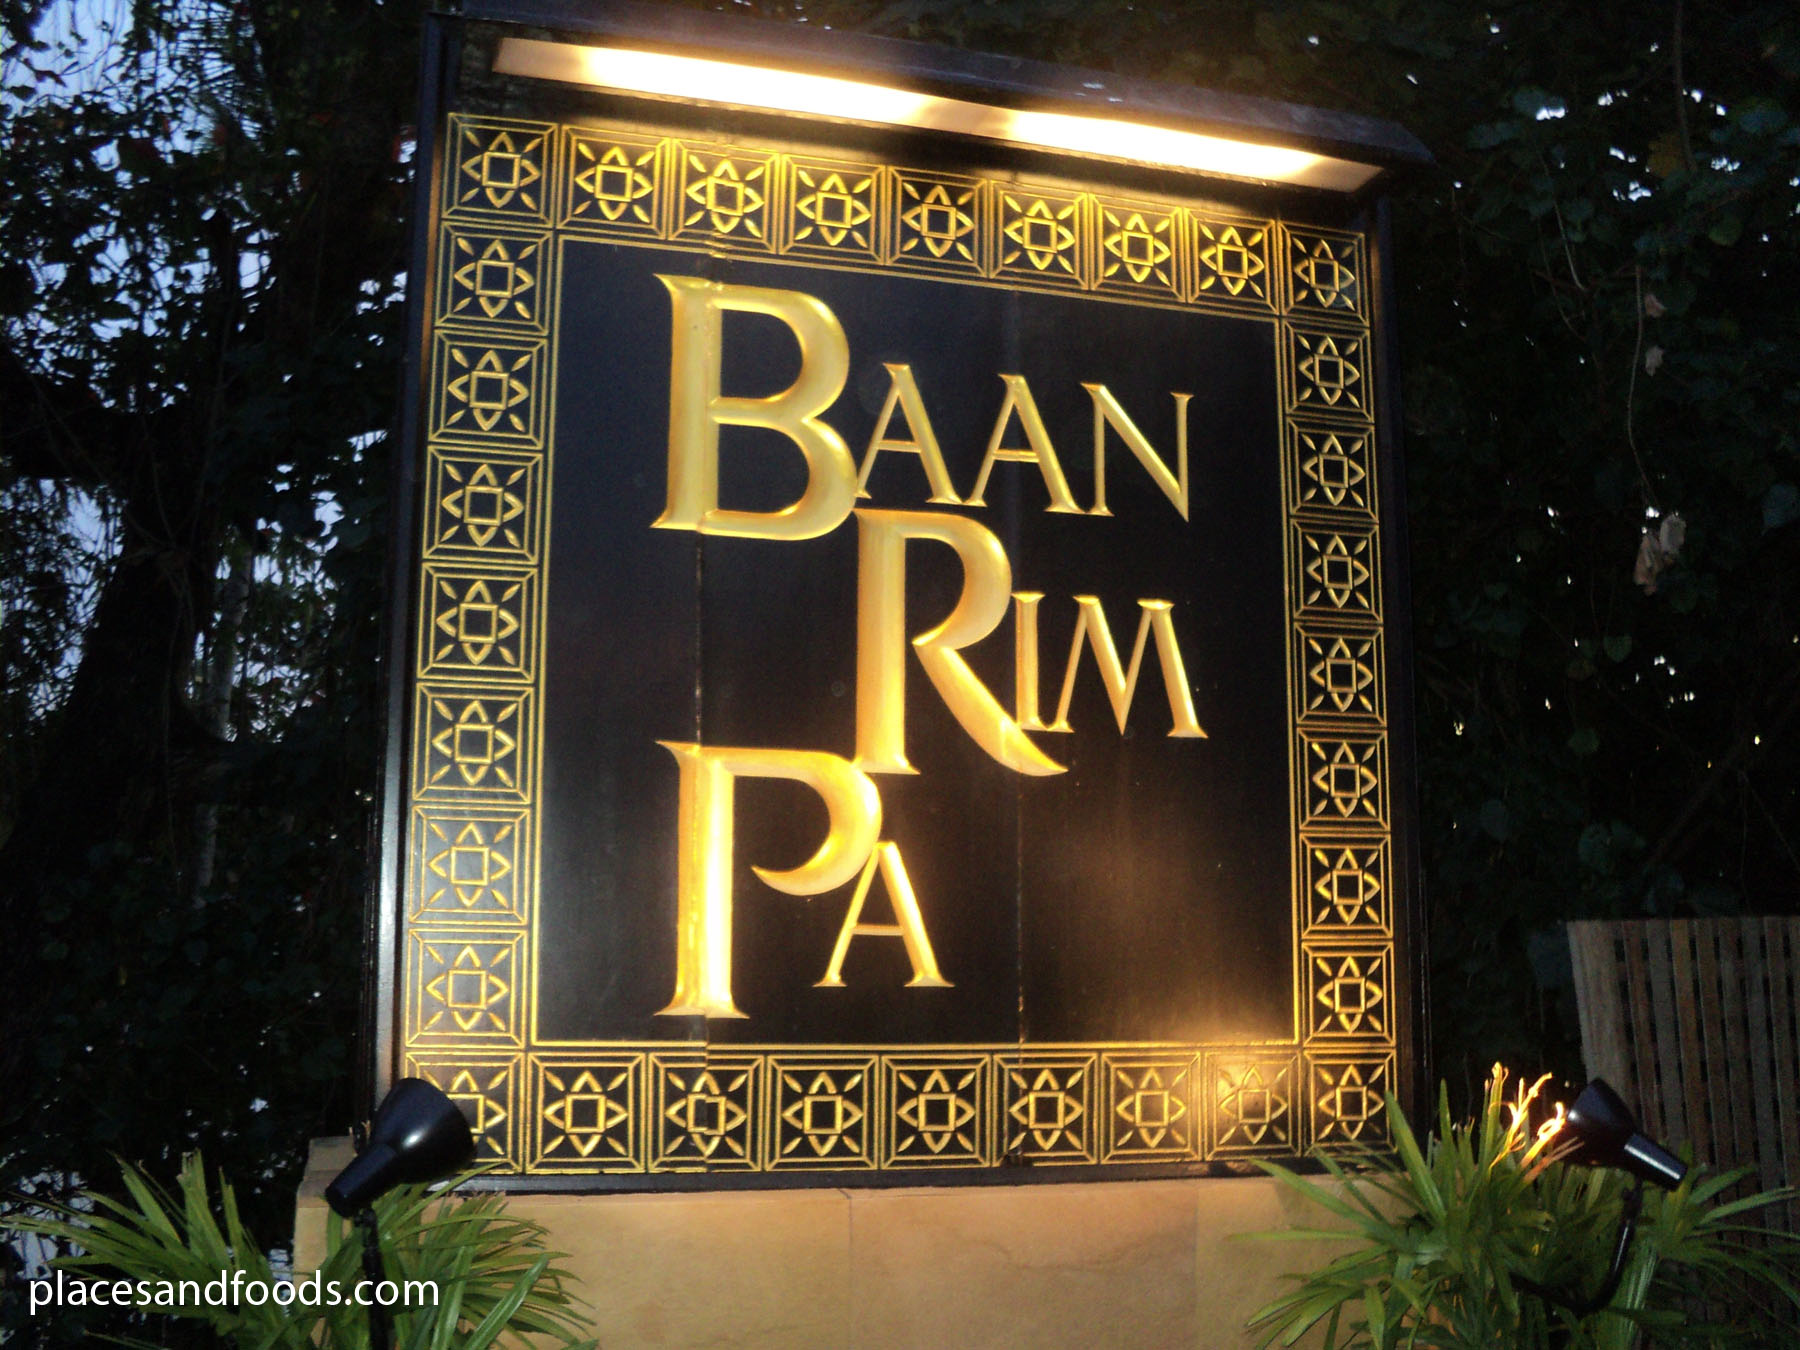 Baan Rim Pa: Phuket and Thailand’s Finest Restaurant1800 x 1350